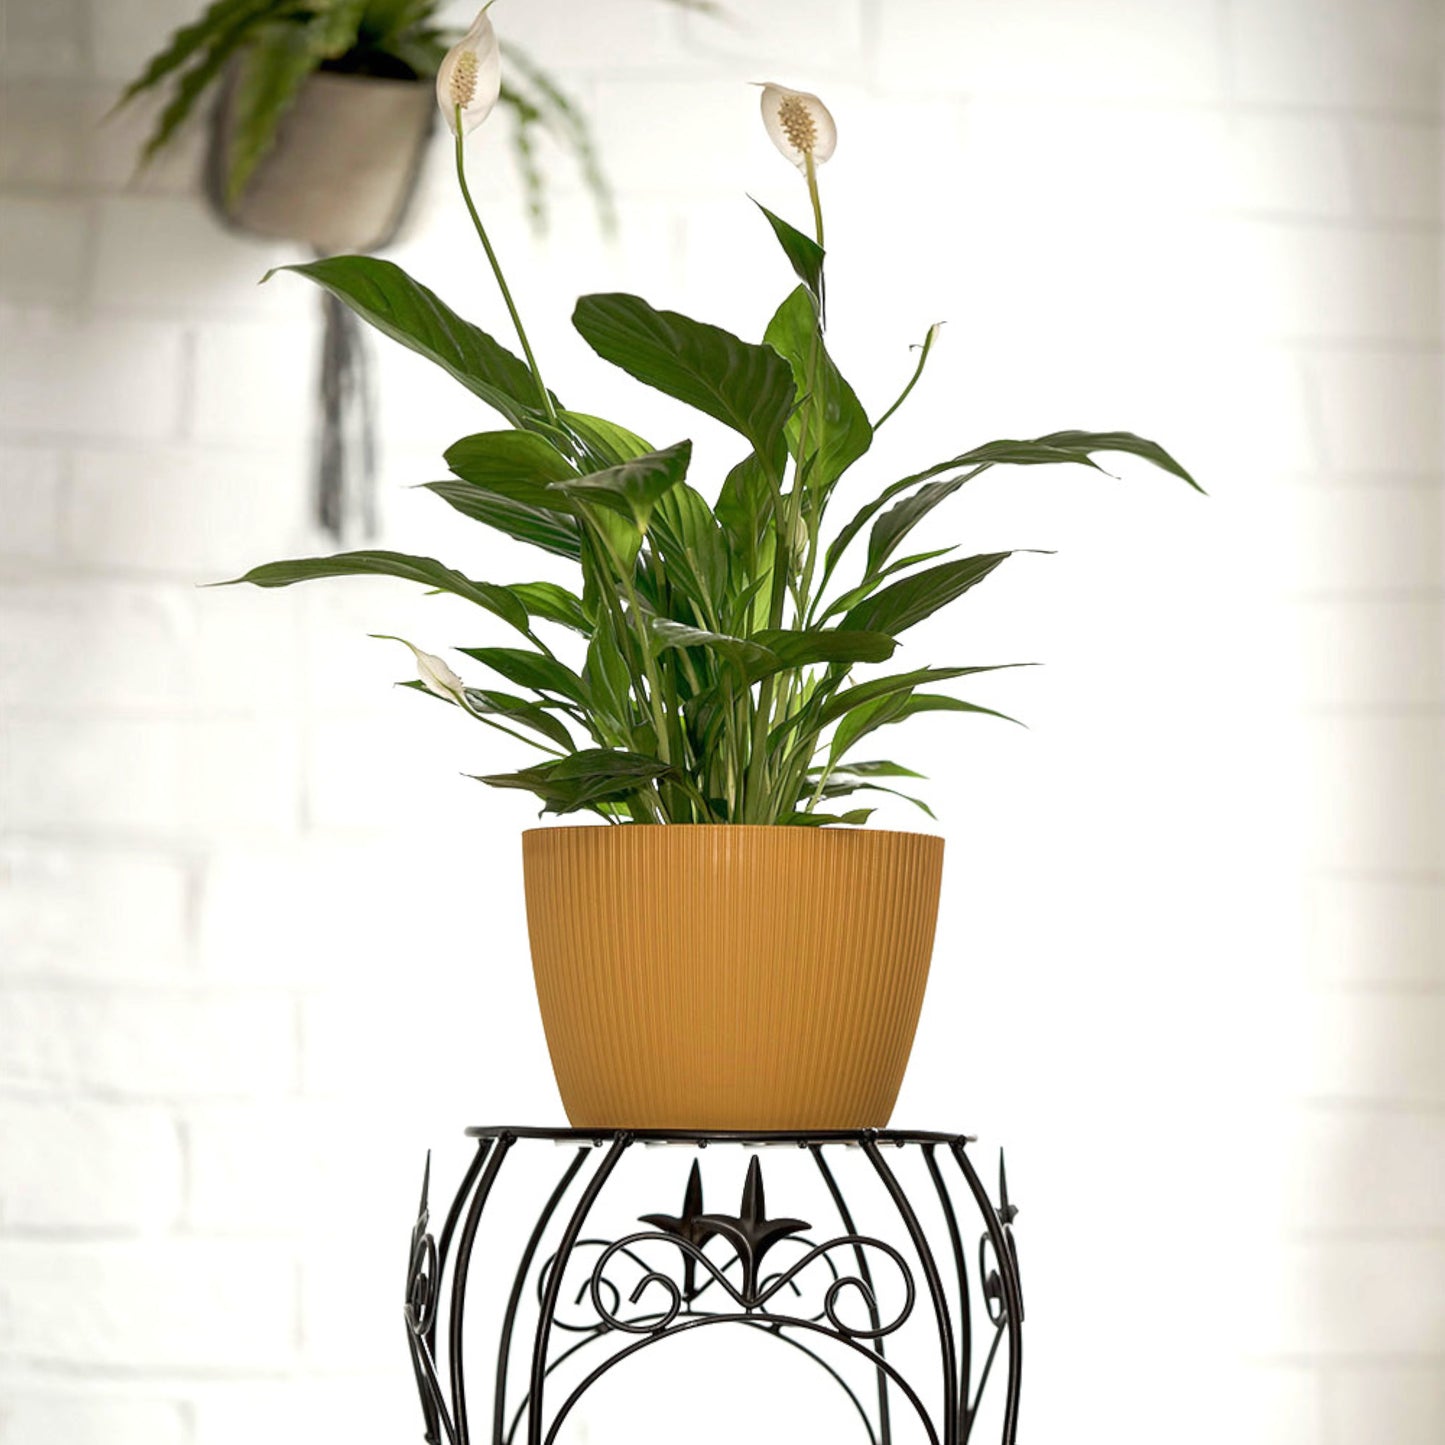 Plant Pots Indoor Set Of 3 Striped Pattern